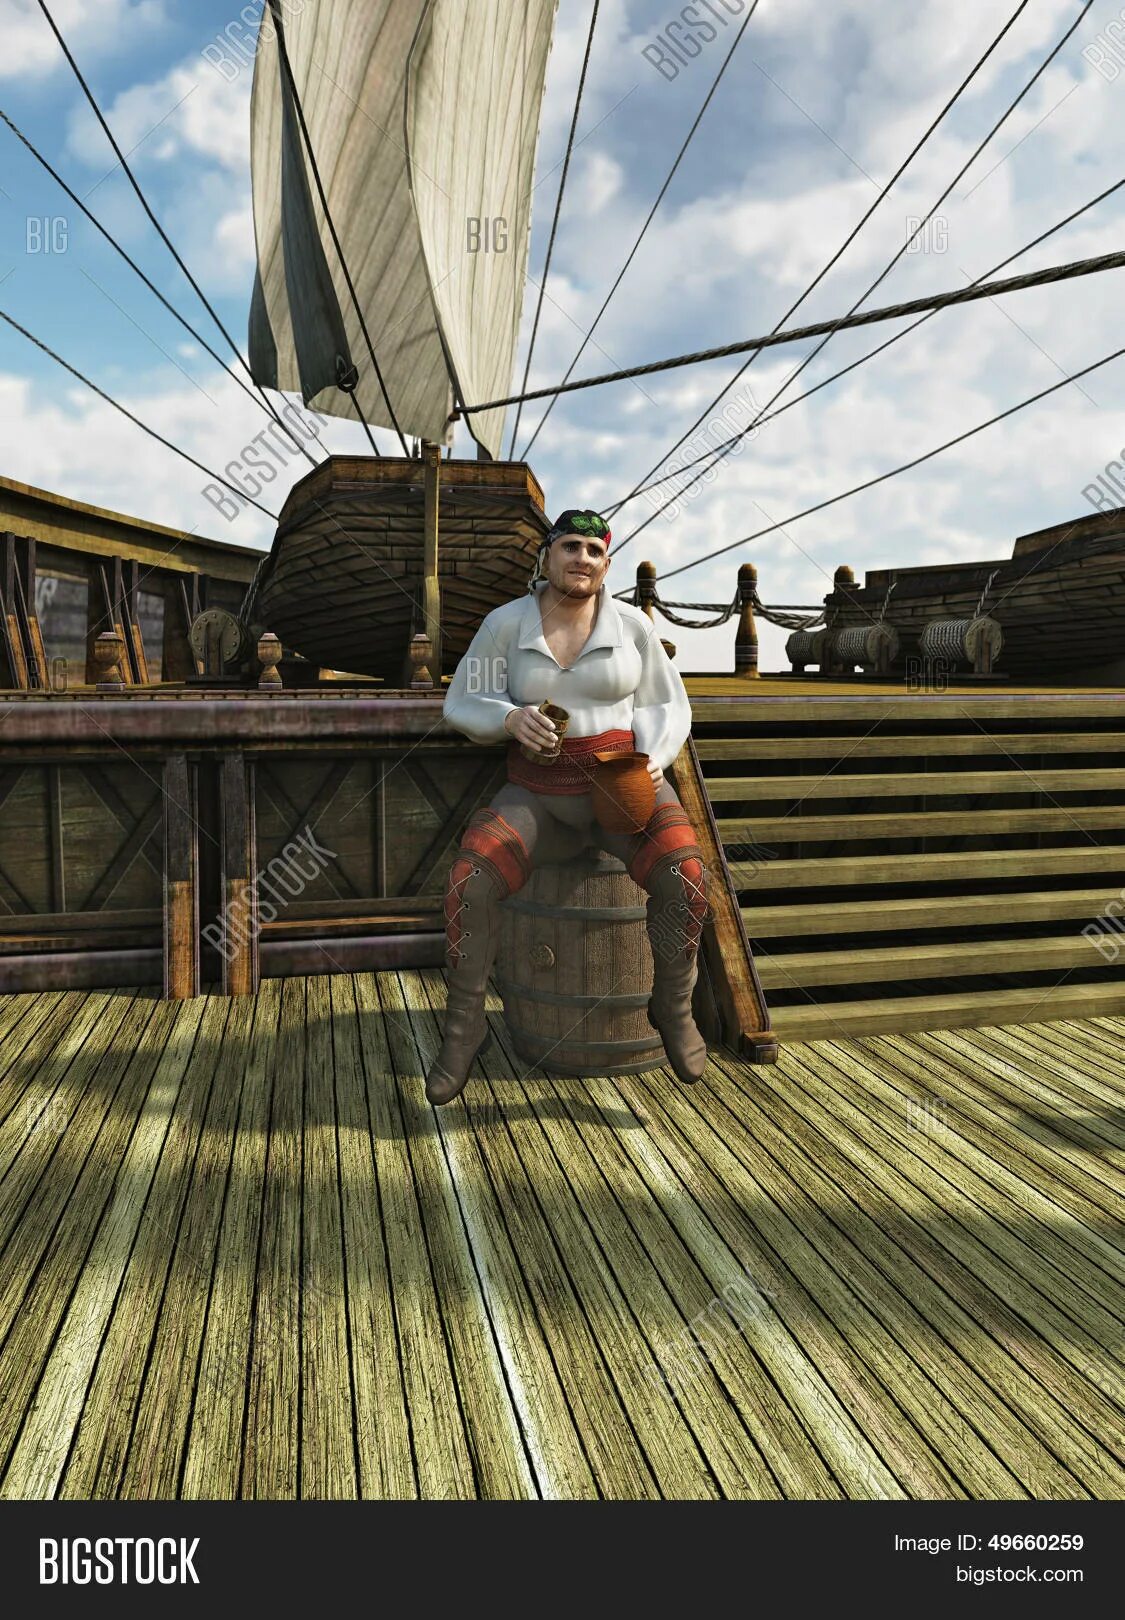 On board the ship. Палуба пиратского корабля. Борт корабля. Парусник палуба. Пираты на палубе.